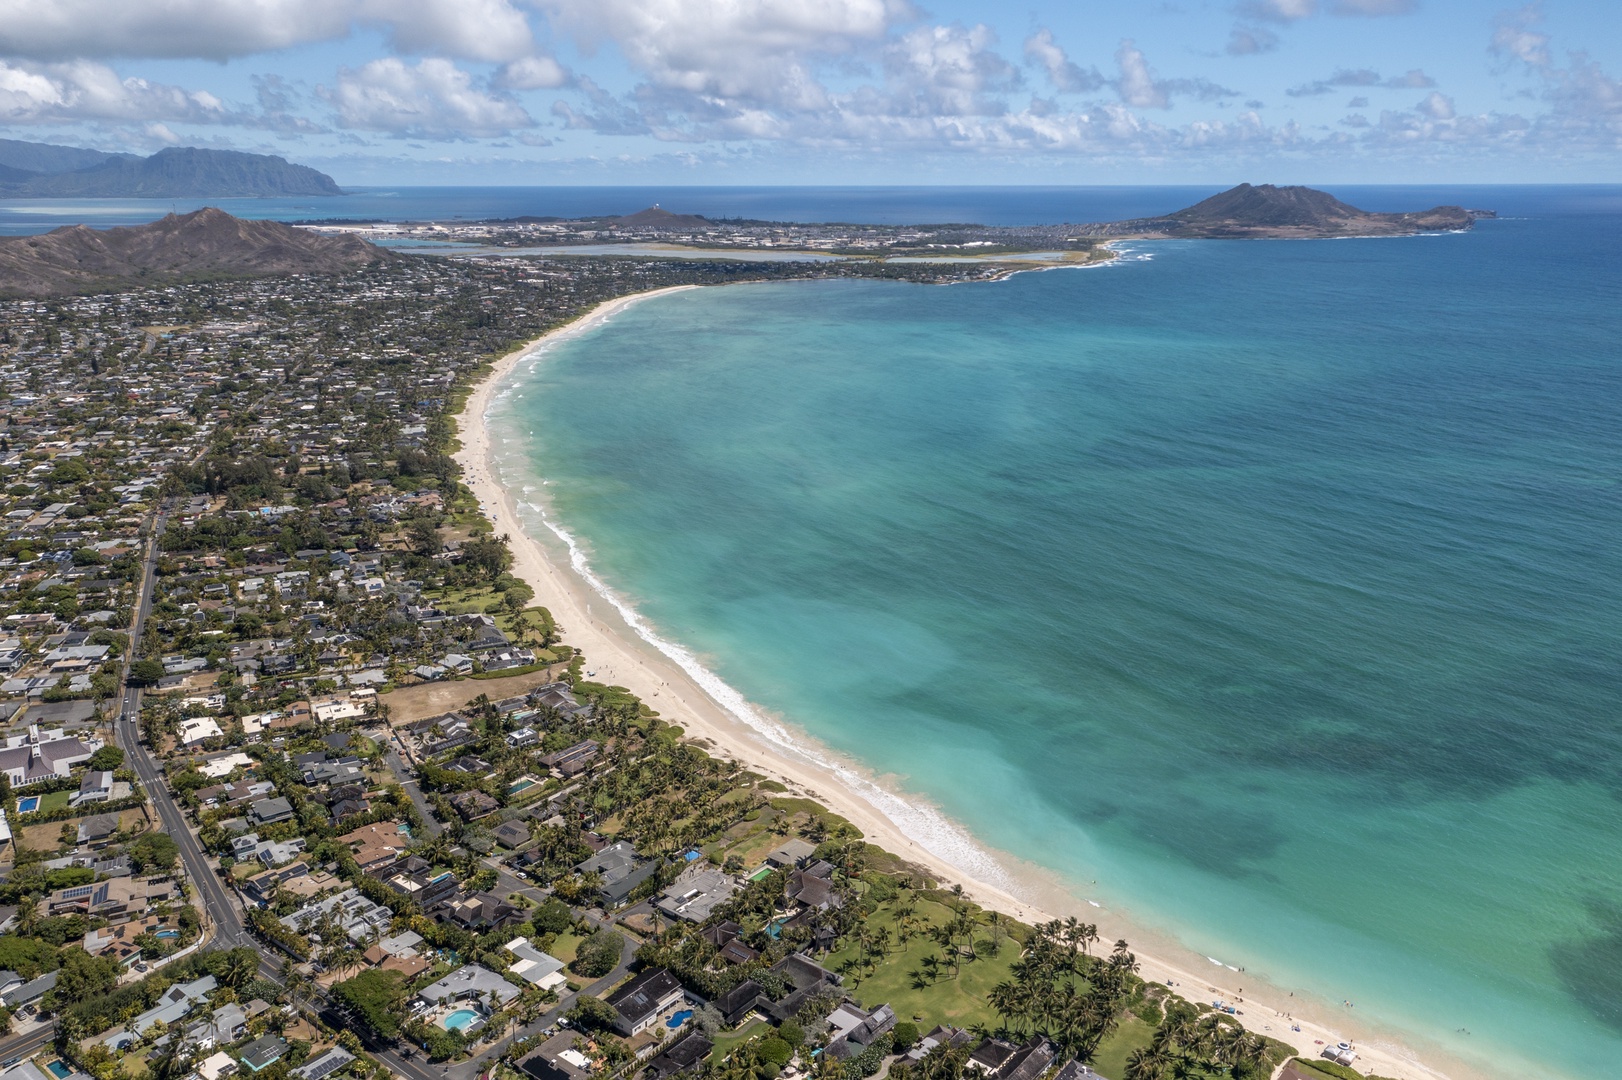 Kailua Vacation Rentals, Ranch Beach Estate - Coastline towards Kaneohe and Mokapu Peninsula